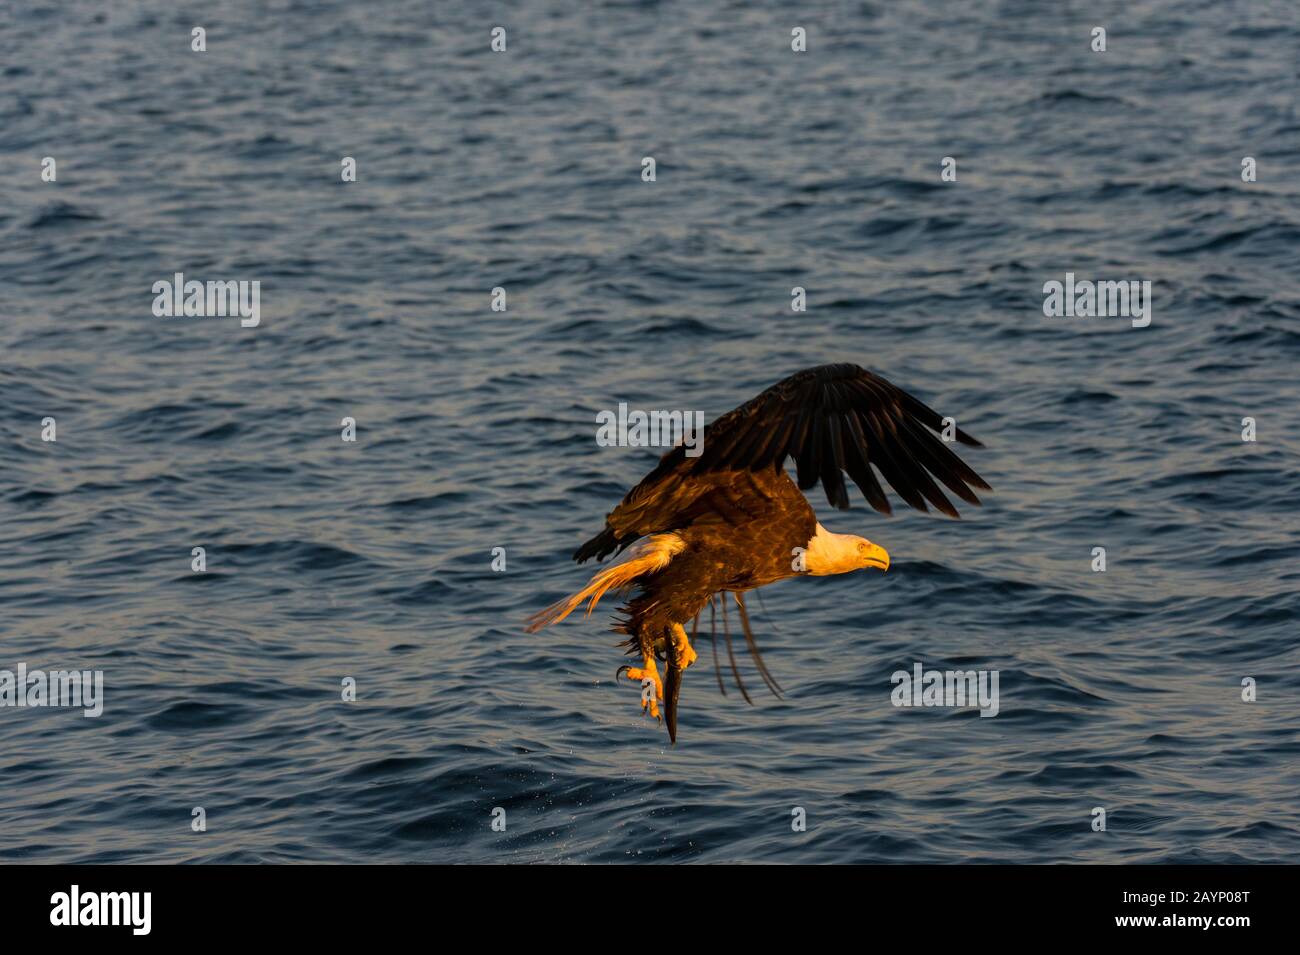 A Bald eagle (Haliaeetus leucocephalus) in flight coming in to catch a fish, near Baddeck on Bras d'Or Lake, Nova Scotia, Canada. Stock Photo